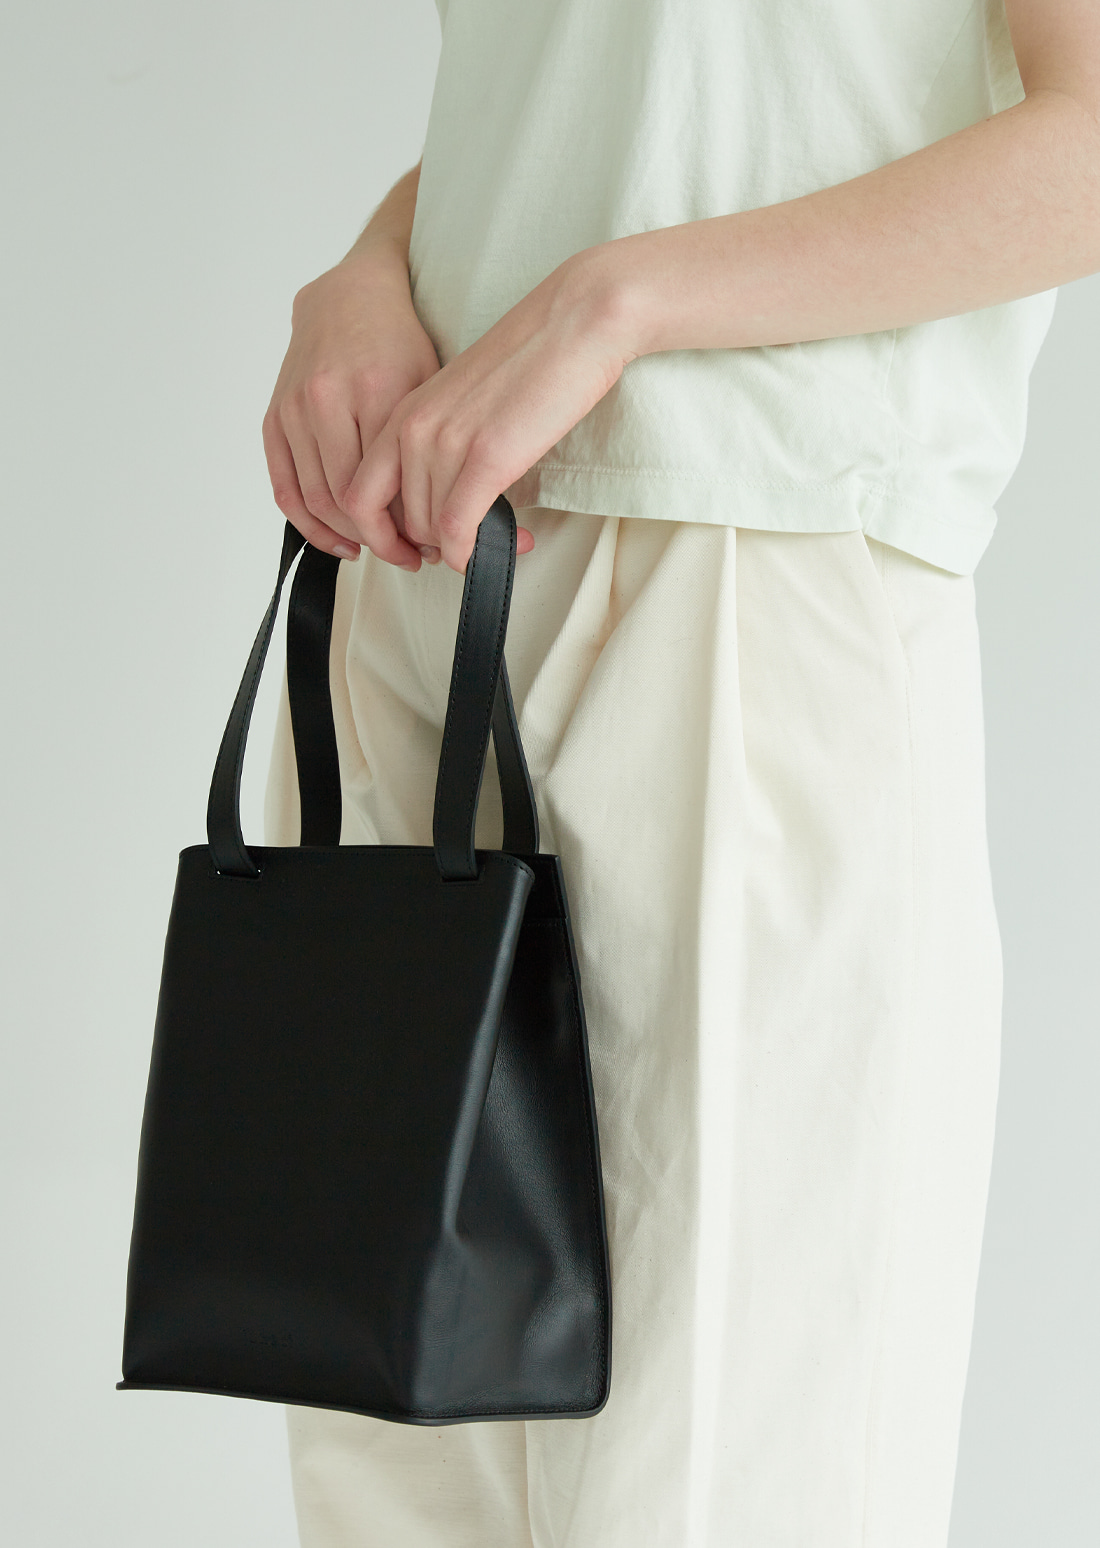 Juneci Leather Multi-Bag(Black)